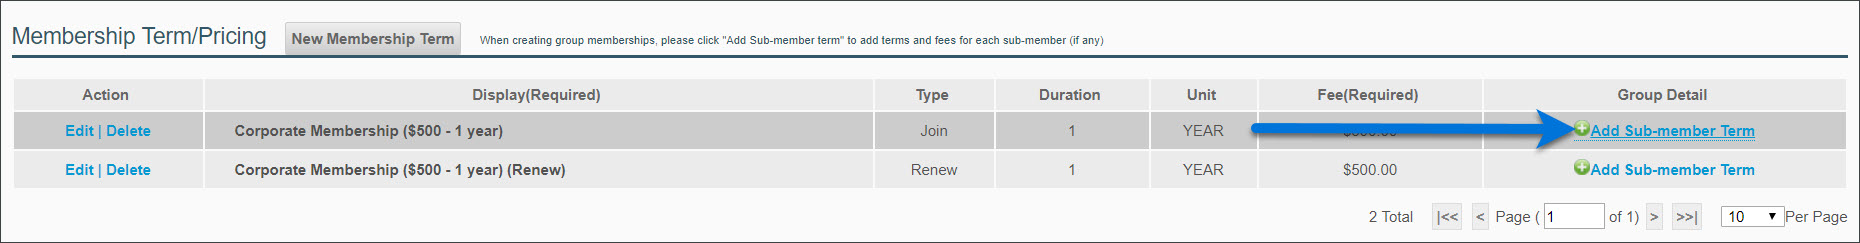 zd_89_add_sub_member_term.jpg